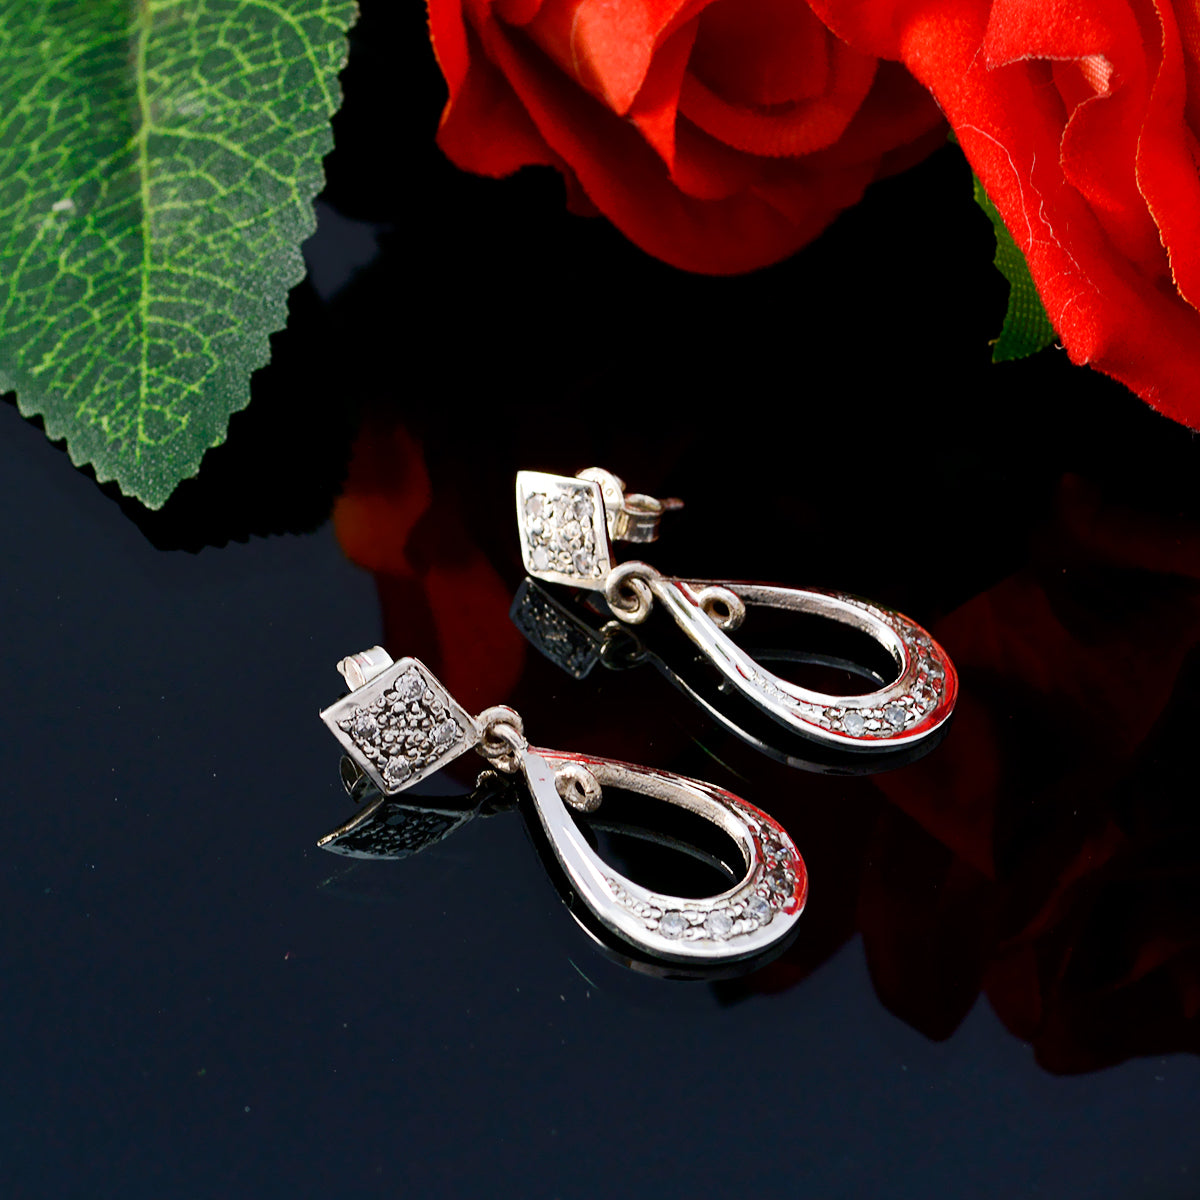 Riyo Nice Gemstone round Faceted White White CZ Silver Earring gift for handmade